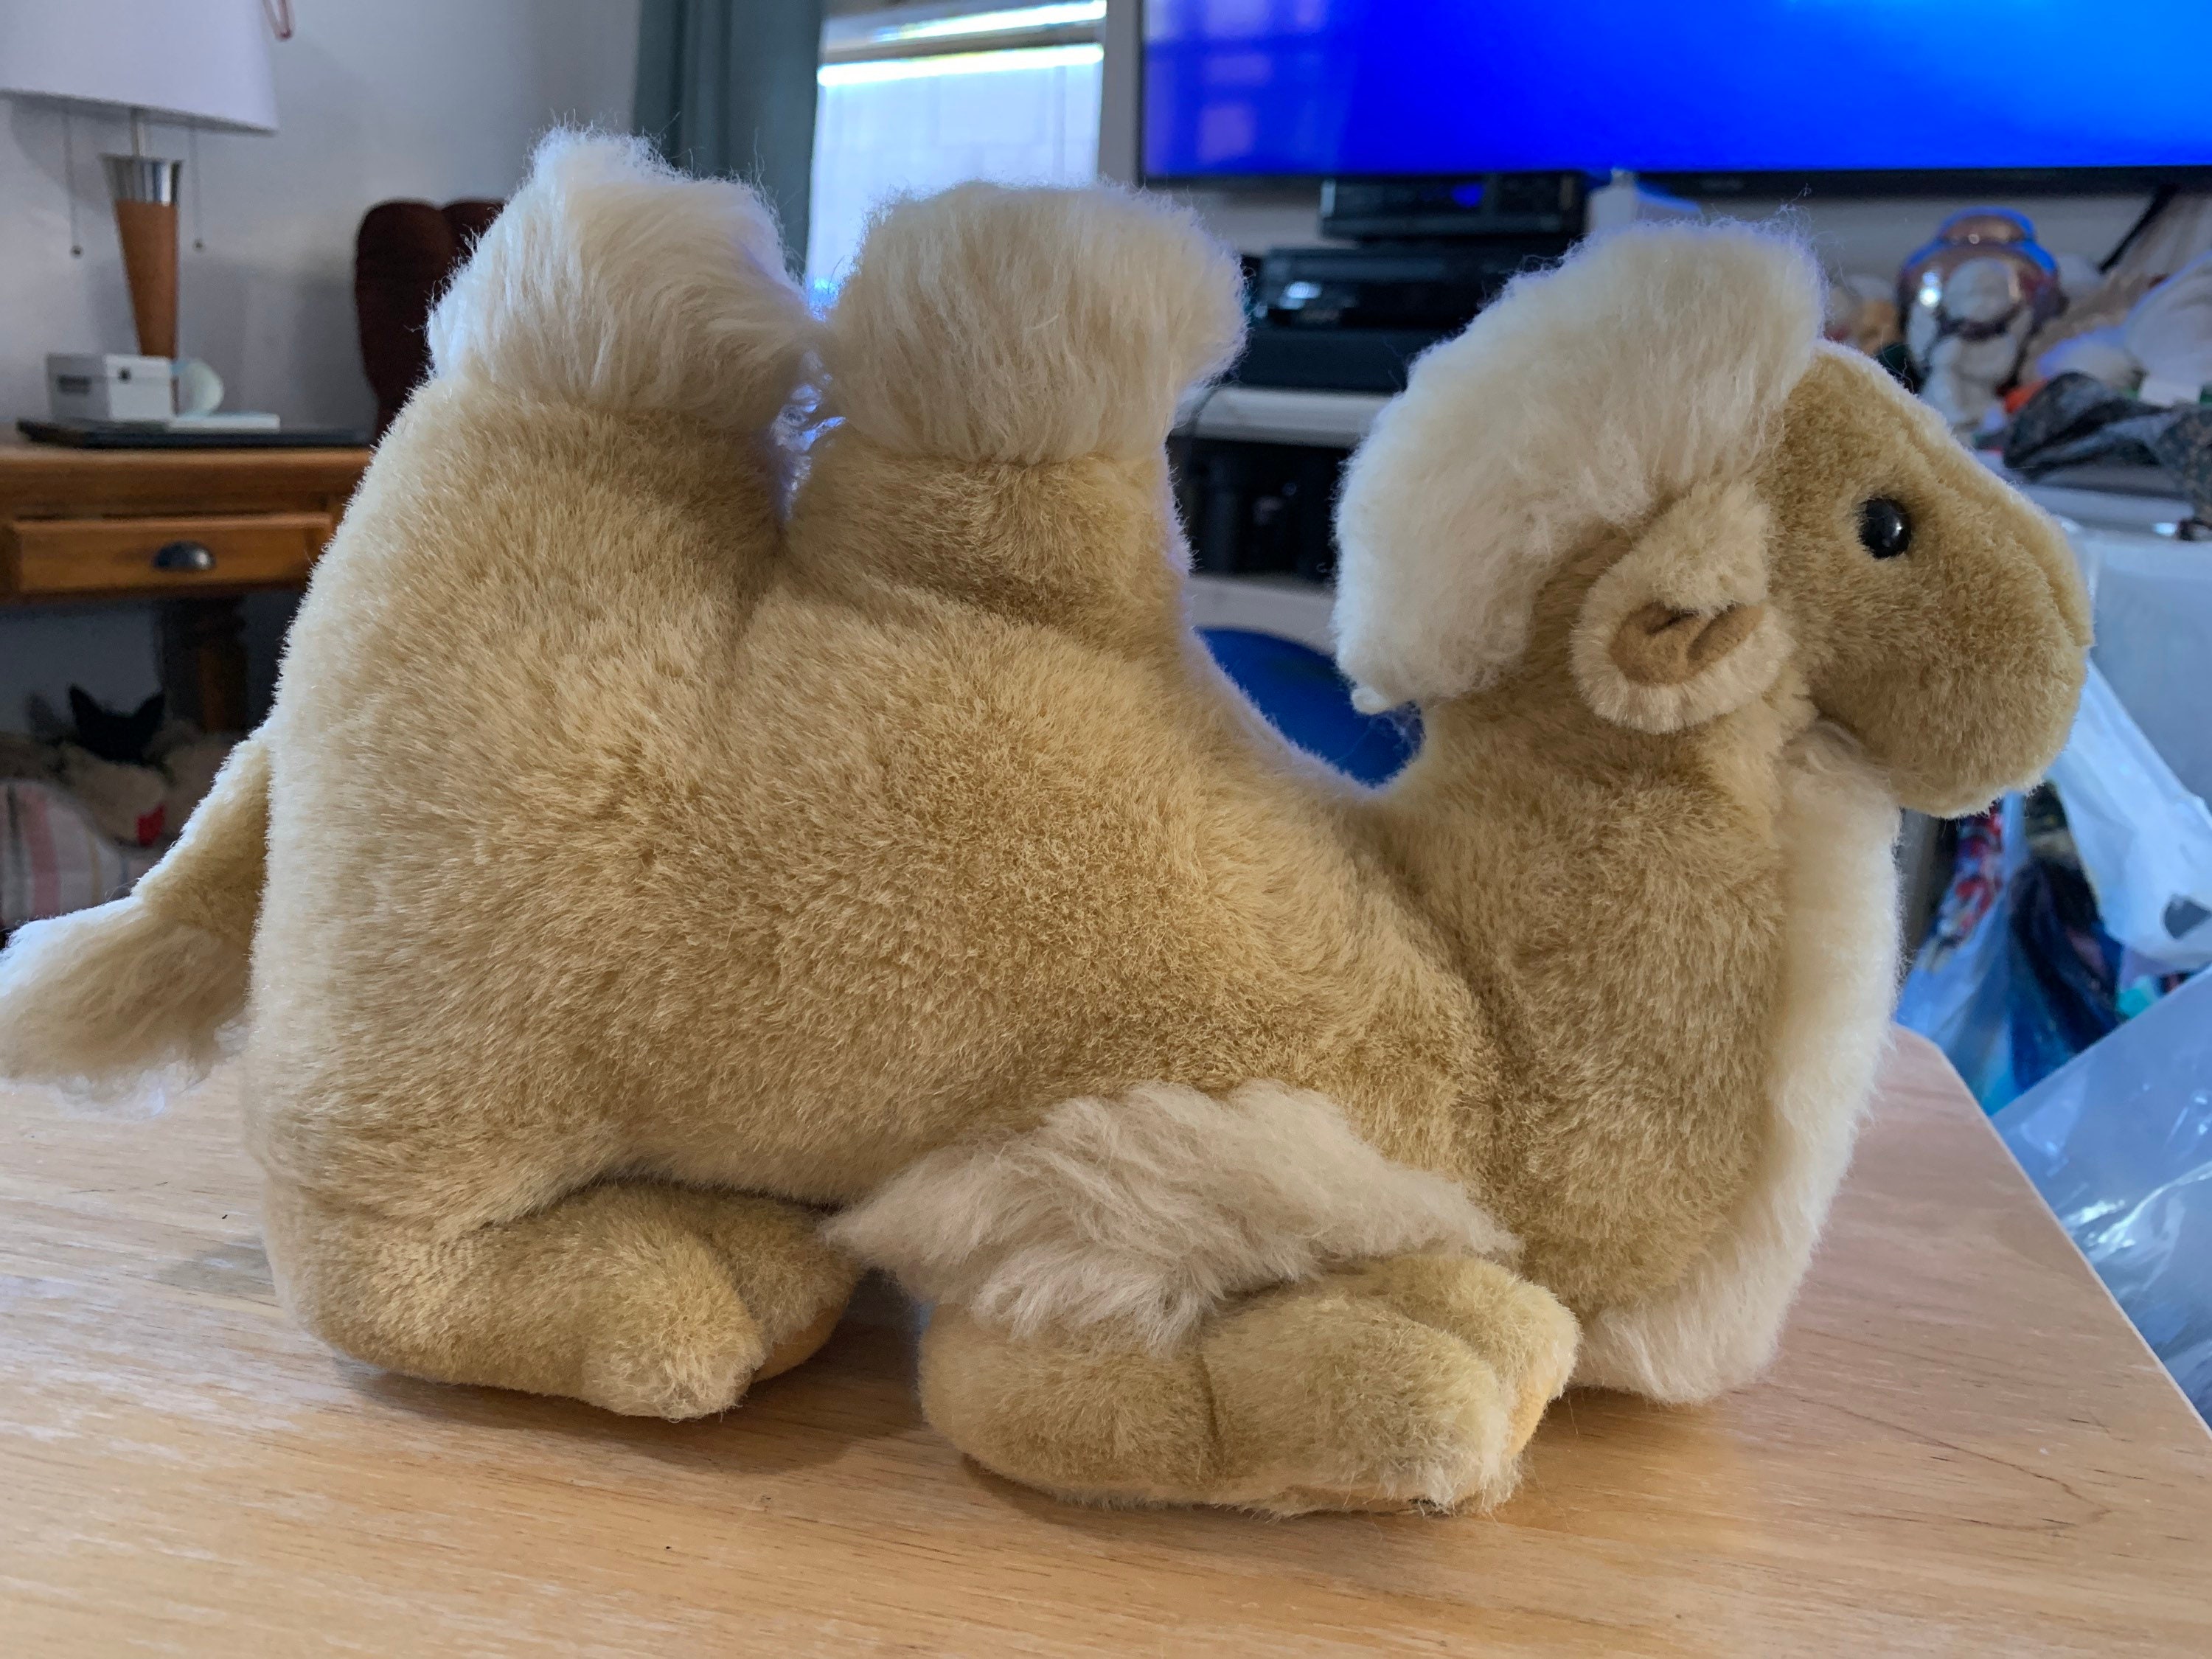 The Camel Crochet Animal Handmade Amigurumi Stuffed Toy Doll High